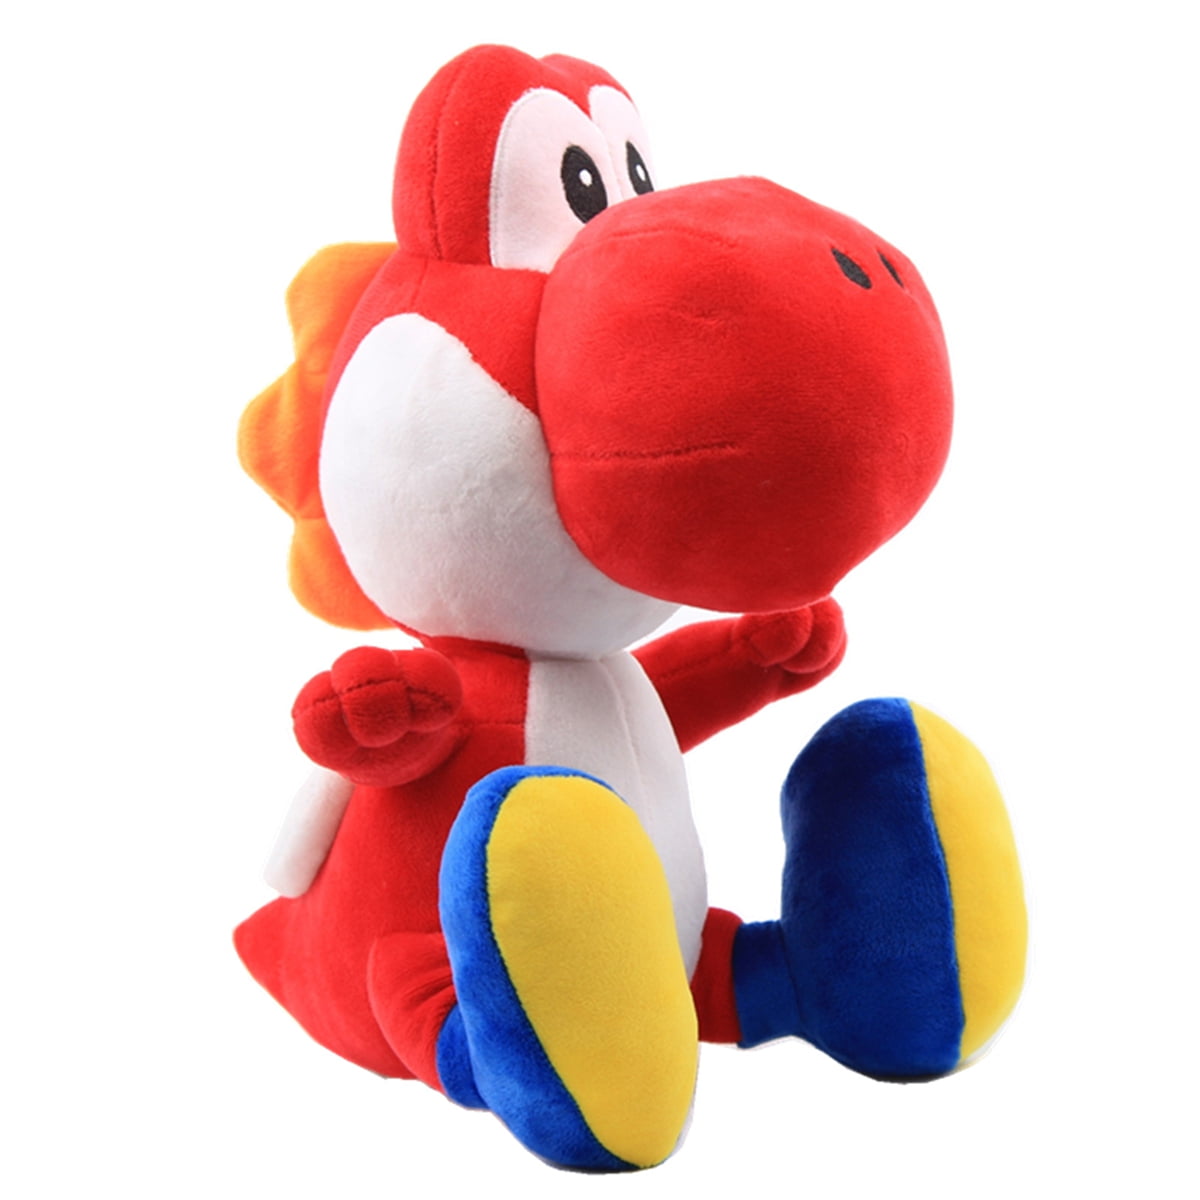 Super Mario 12" Red Yoshi Stuffed Plush Toy - Walmart.com